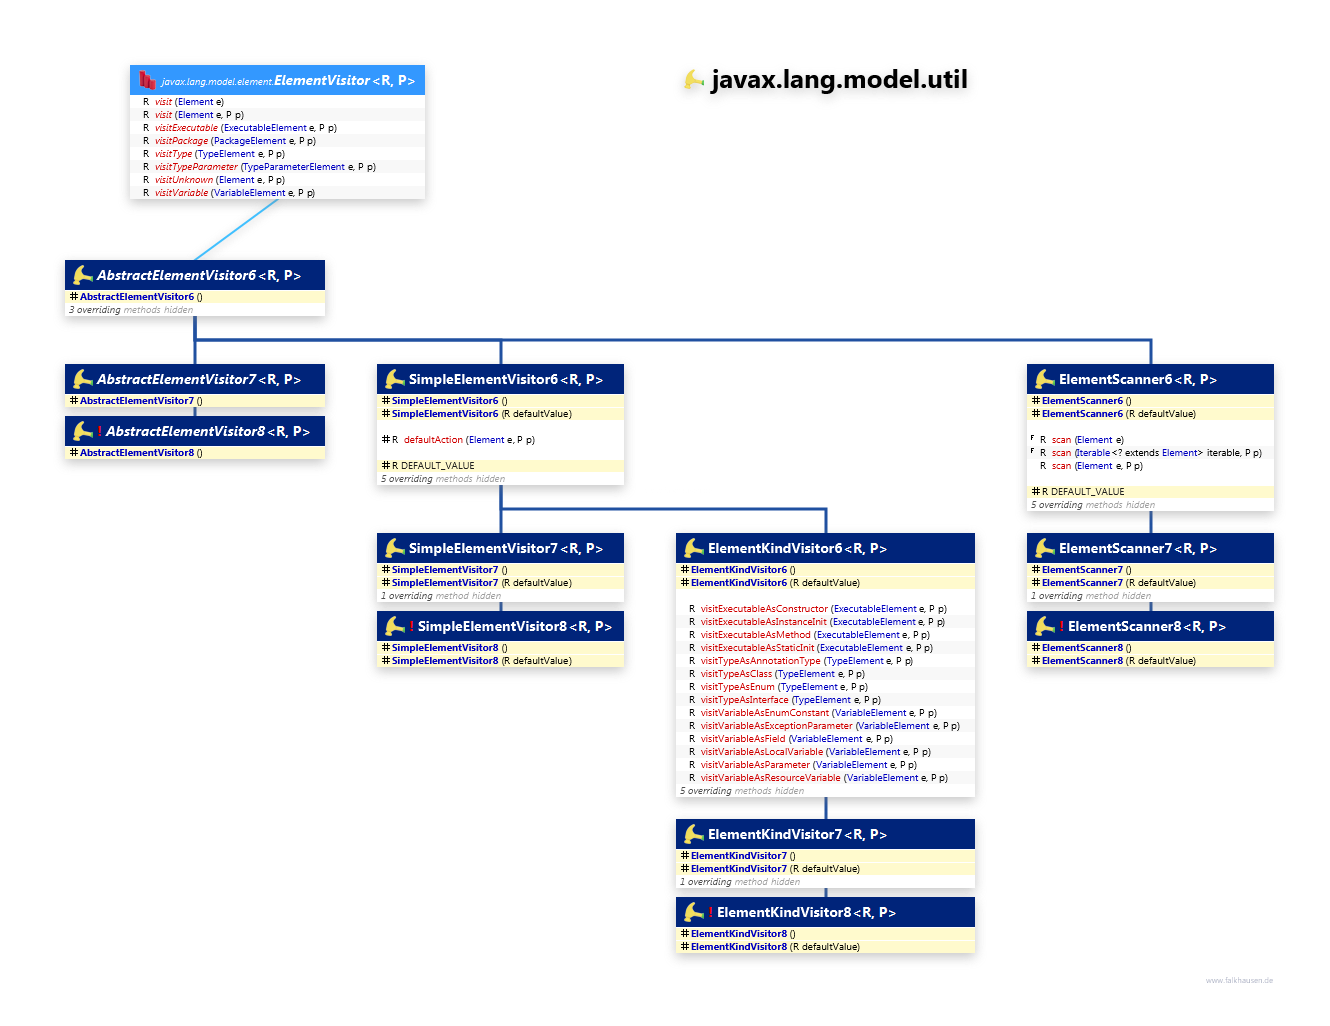 javax.lang.model.util ElementVisitor class diagram and api documentation for Java 8